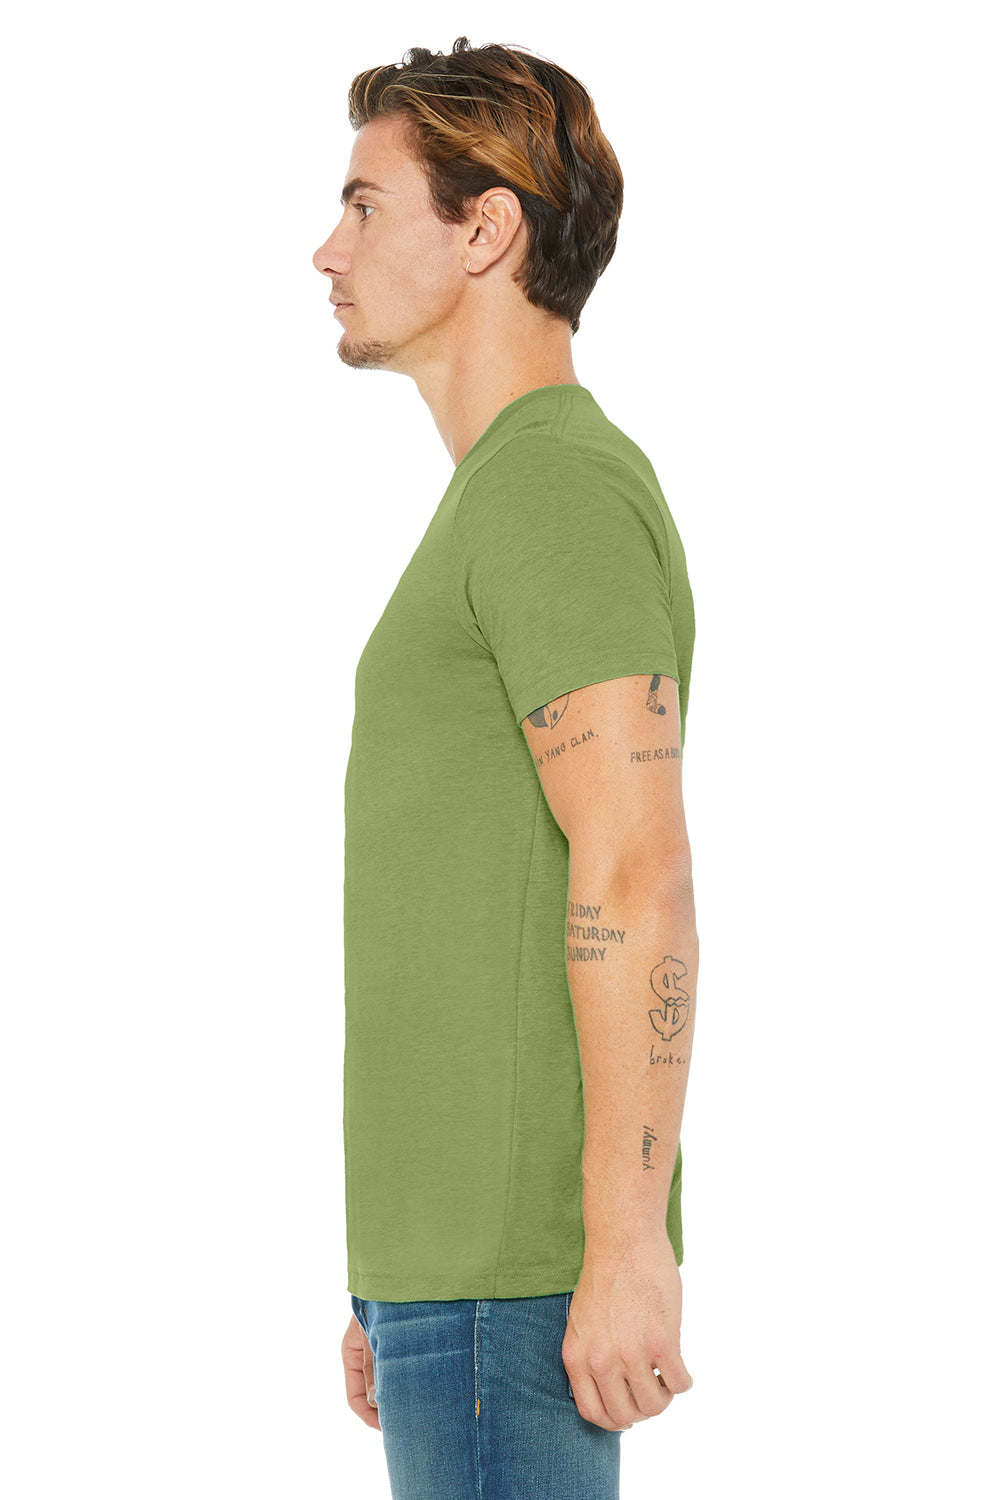 Bella + Canvas 3005 Mens Jersey Short Sleeve V-Neck T-Shirt Heather Green Side